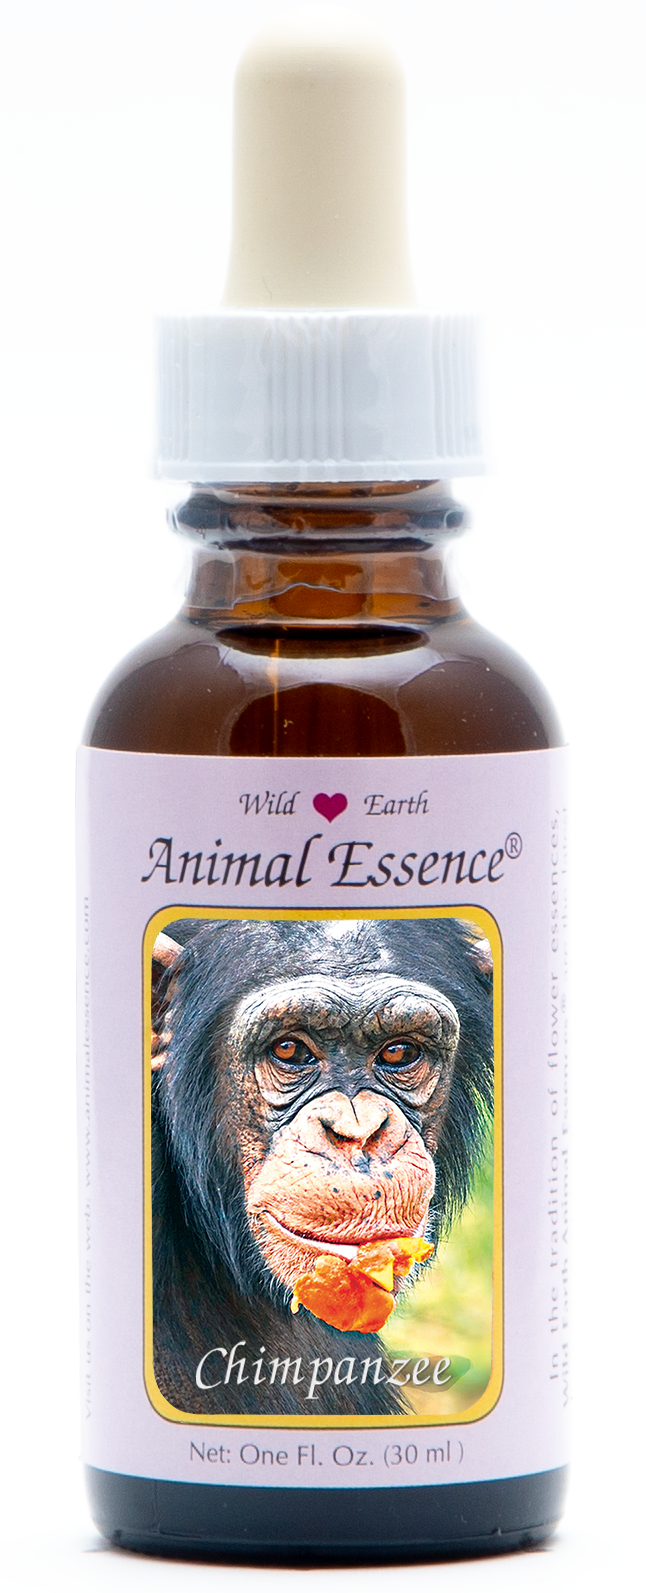 Chimpanzee animal essence 30ml